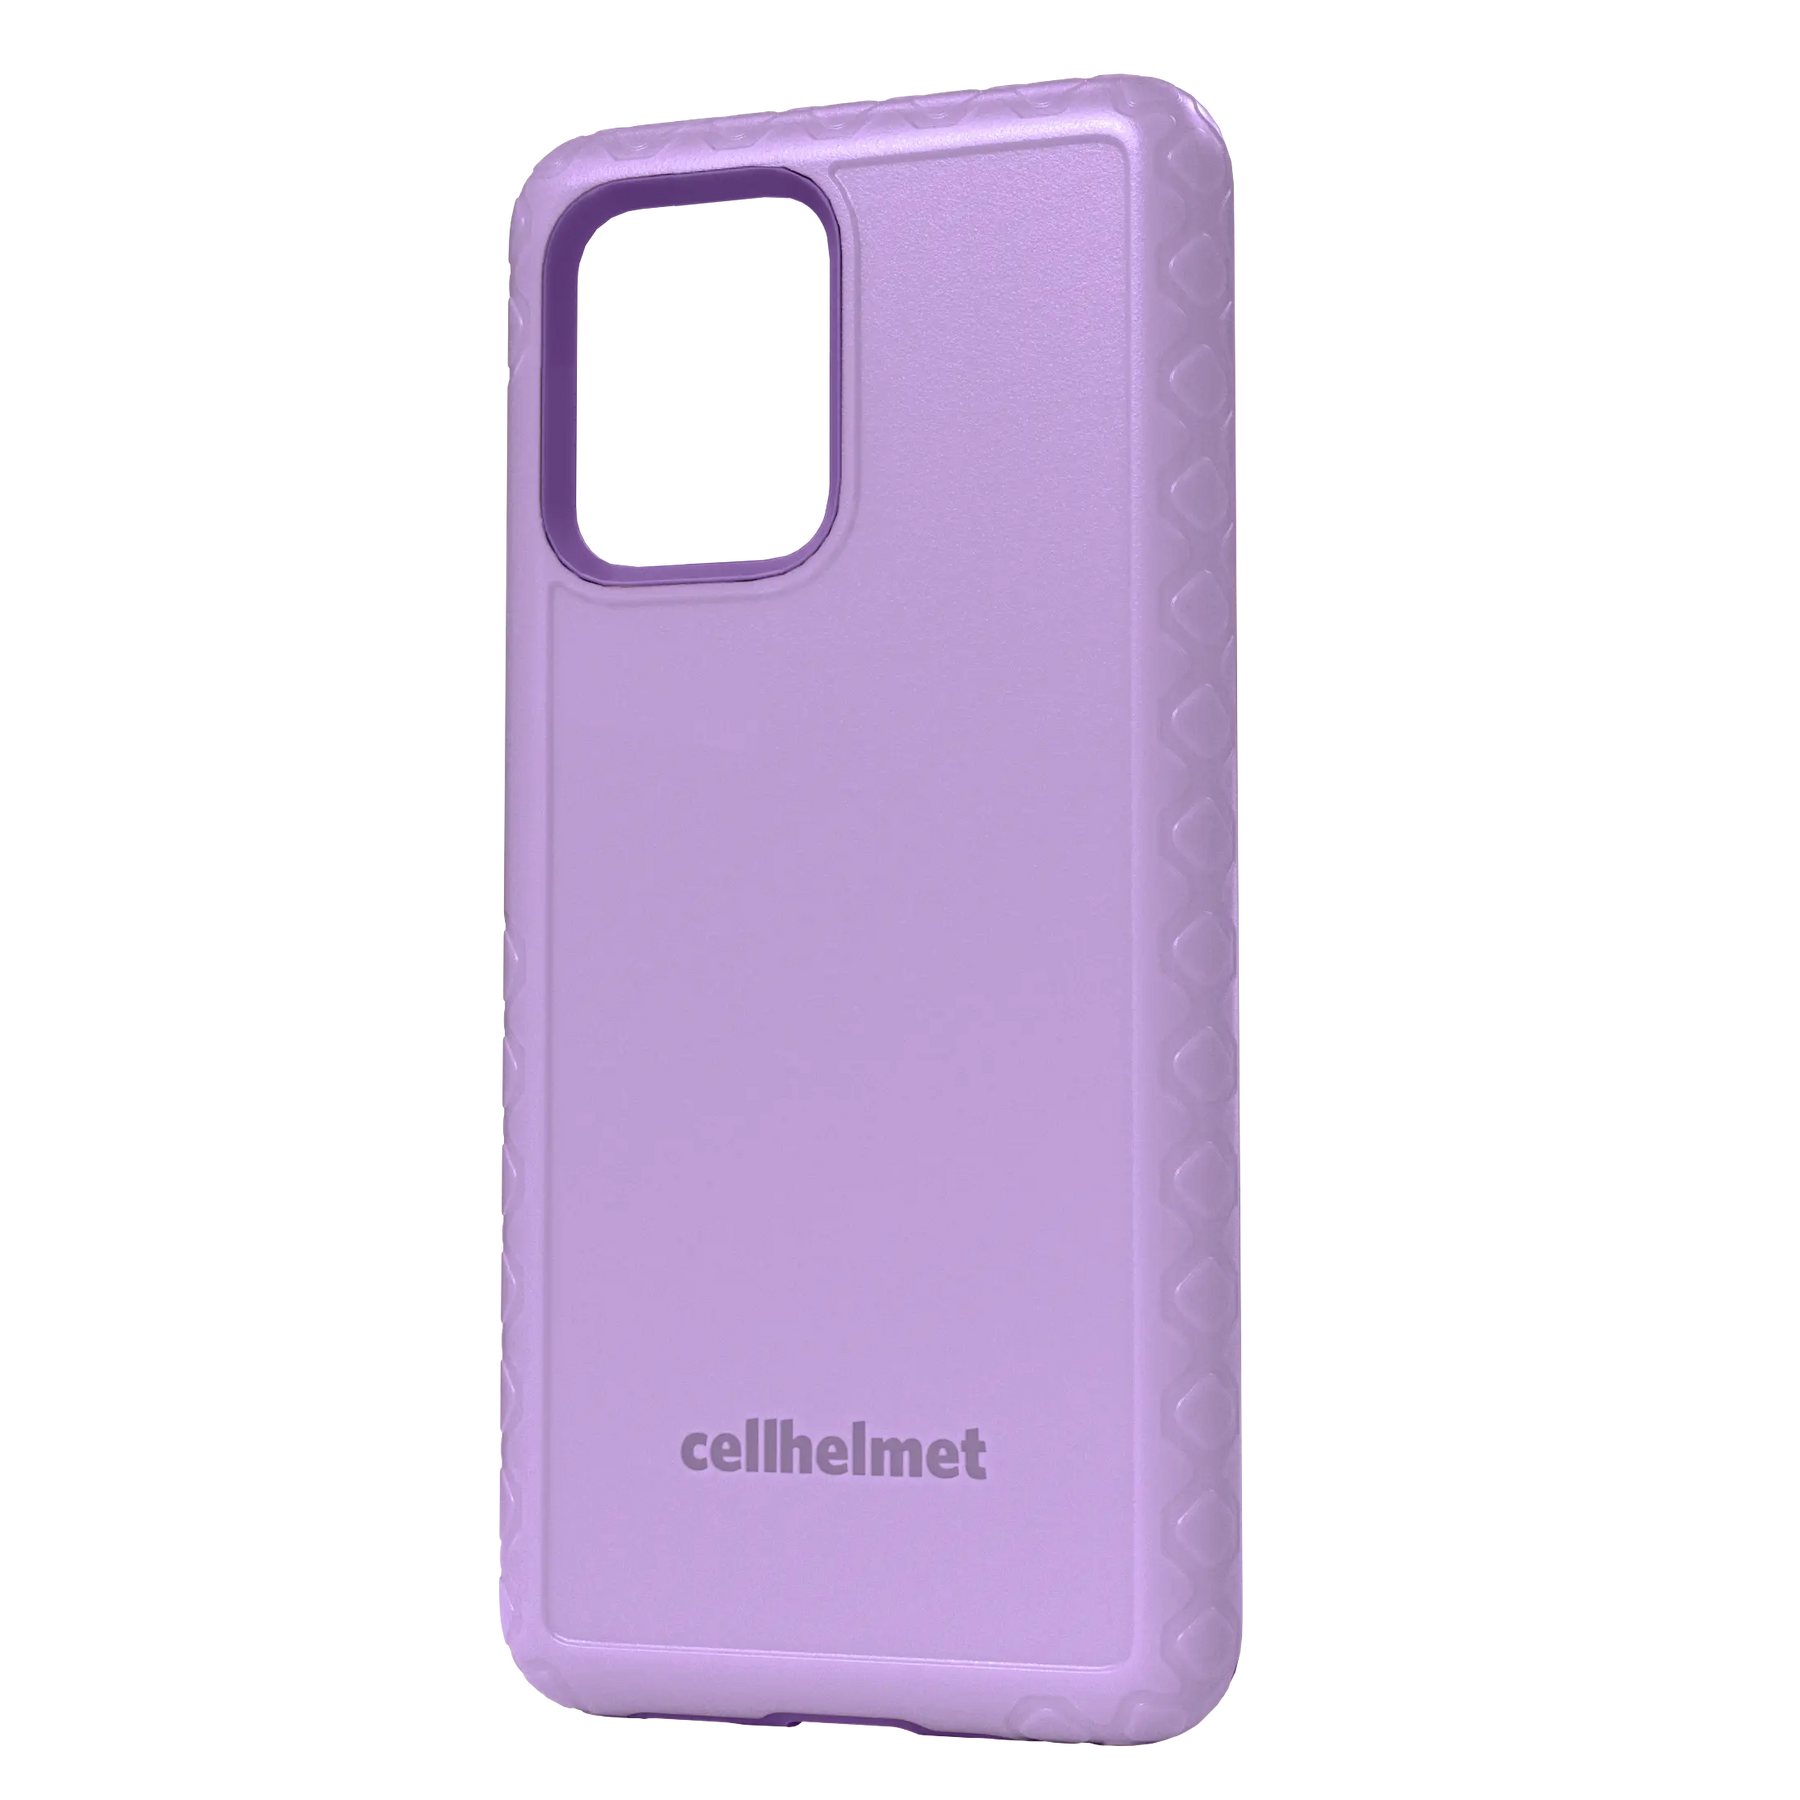 Purple cellhelmet Customizable Case for Galaxy S20 Plus